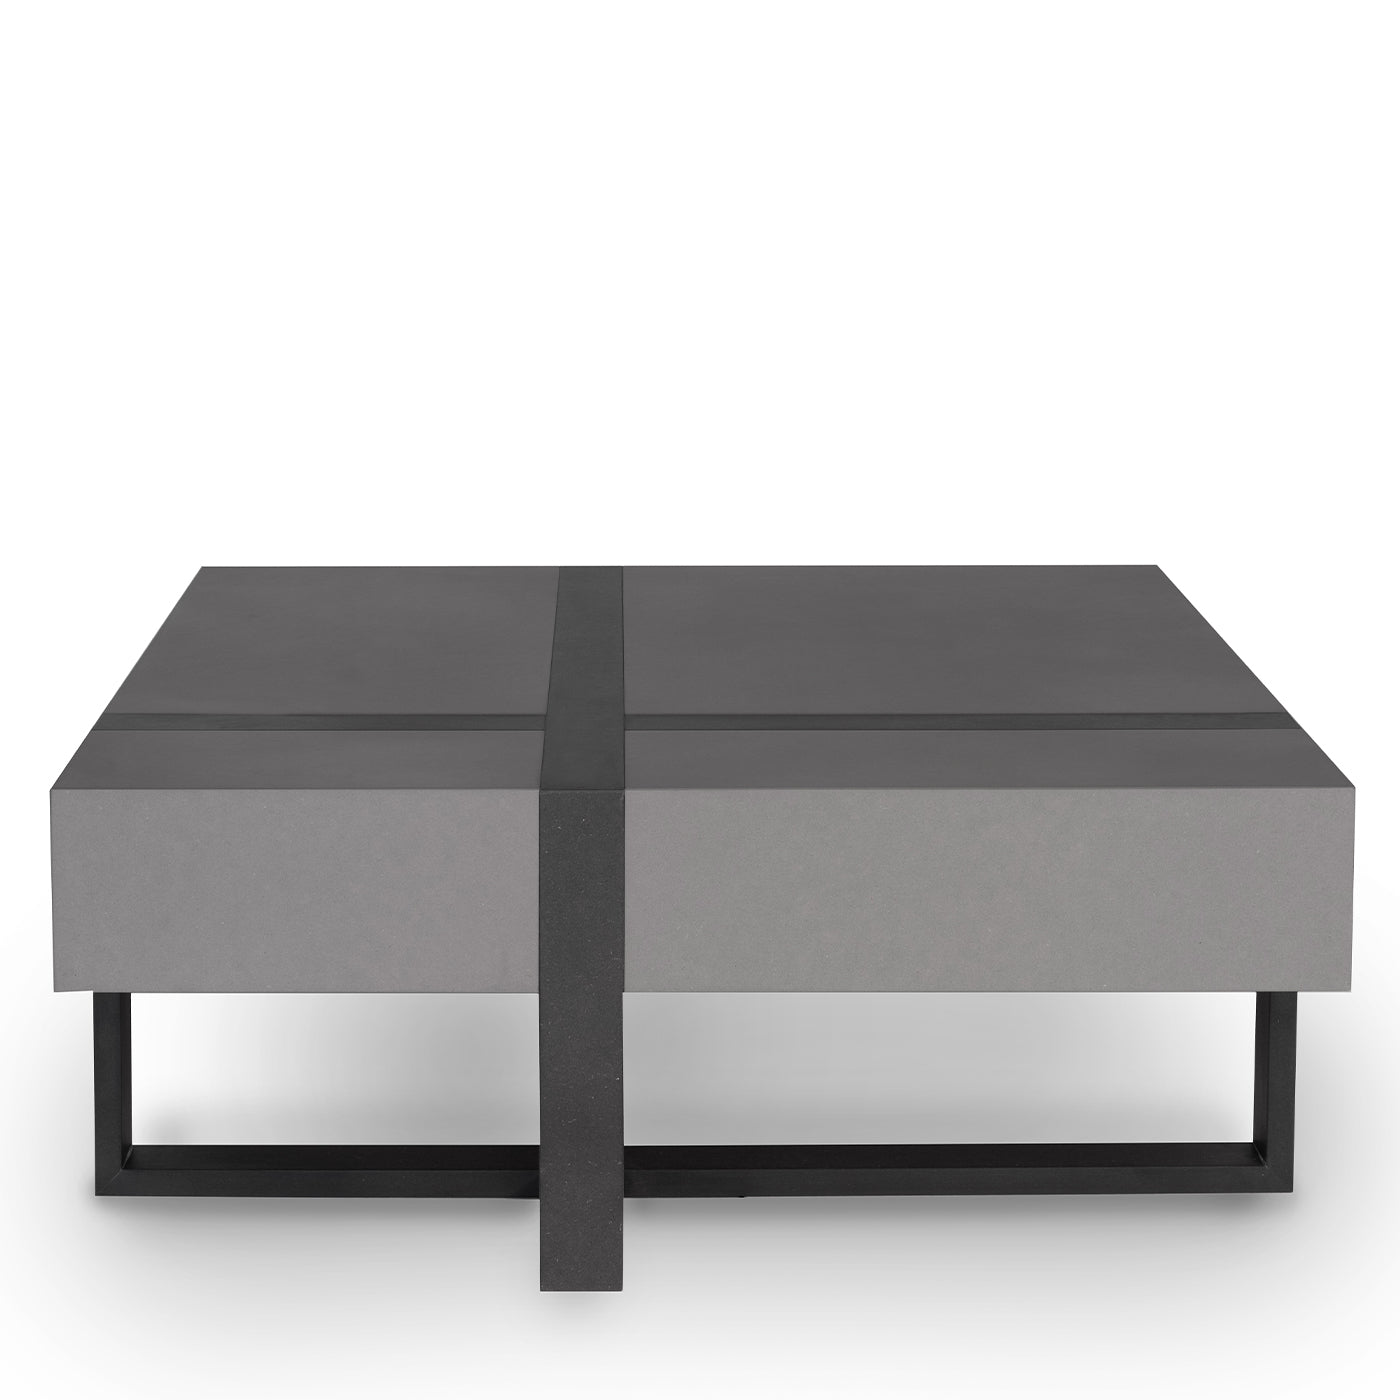 Loop Gray Side Table by Giulia Contaldo - Alternative view 1